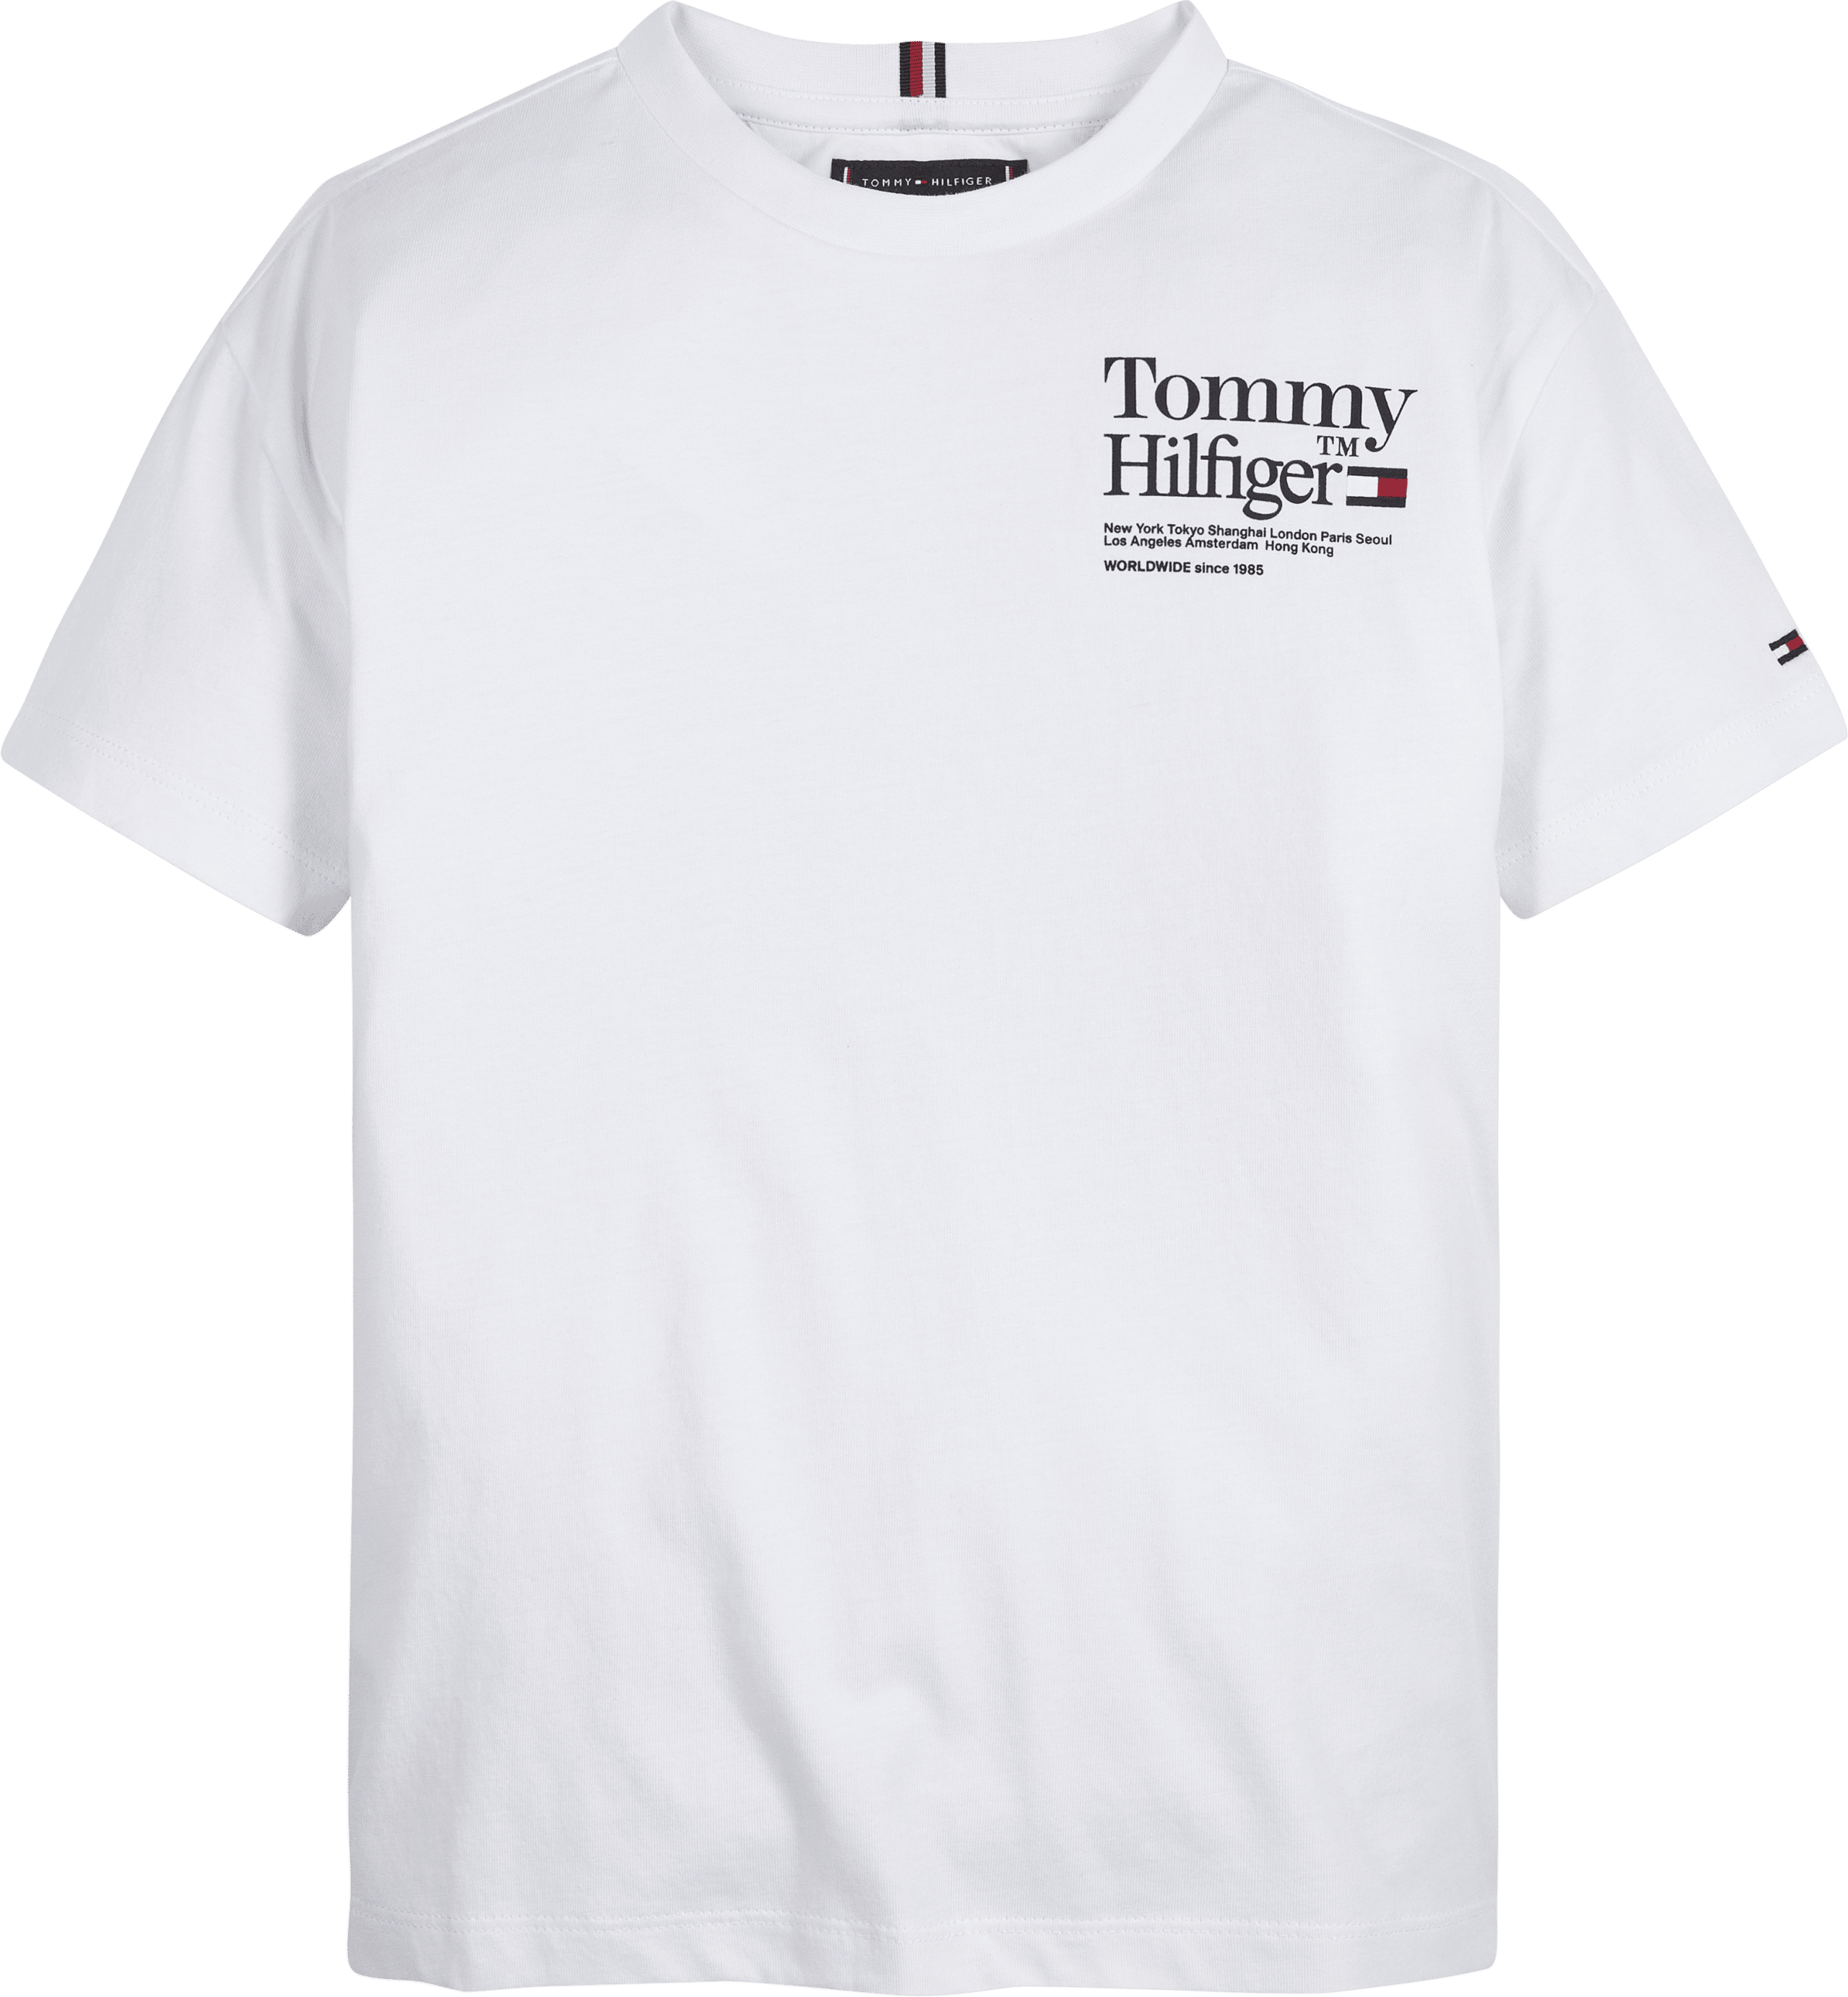 TOMMY HILFIGER - TIMELESS TOMMY TEE S/S - KB0KB08211